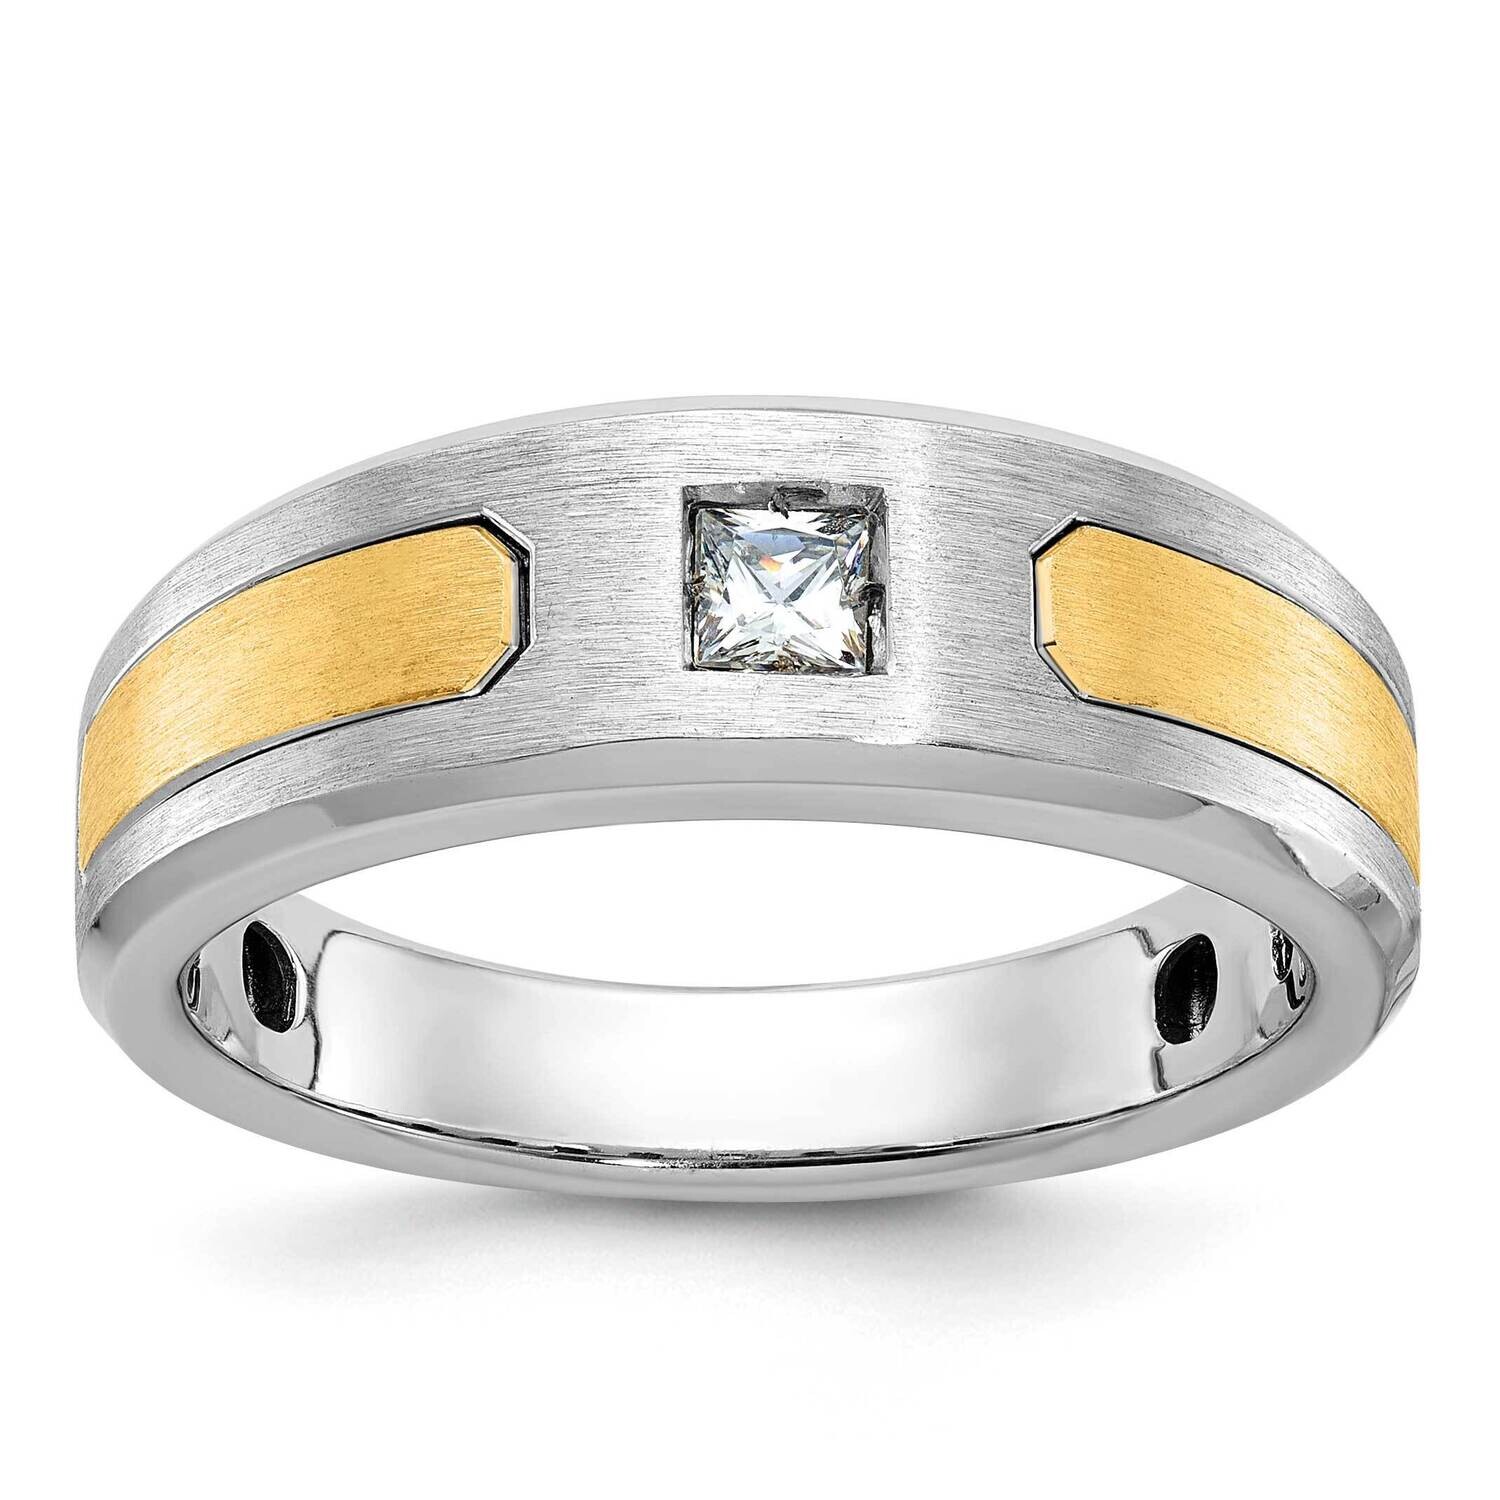 Ibgoodman Men's Polished Satin Diamond Ring Mounting 14k Two-Tone Gold B63791-4WY